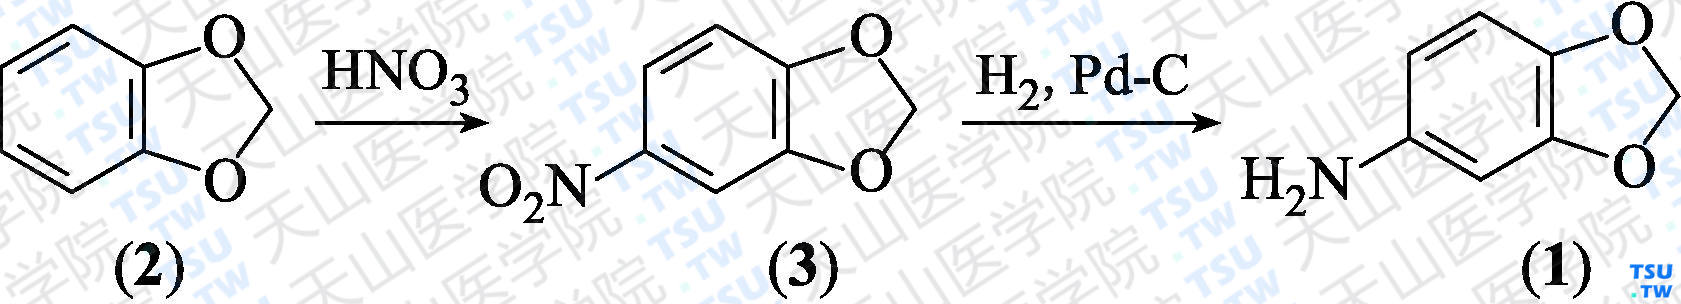 3，4-亚甲二氧基苯胺（分子式：C<sub>7</sub>H<sub>7</sub>NO<sub>2</sub>）的合成方法路线及其结构式